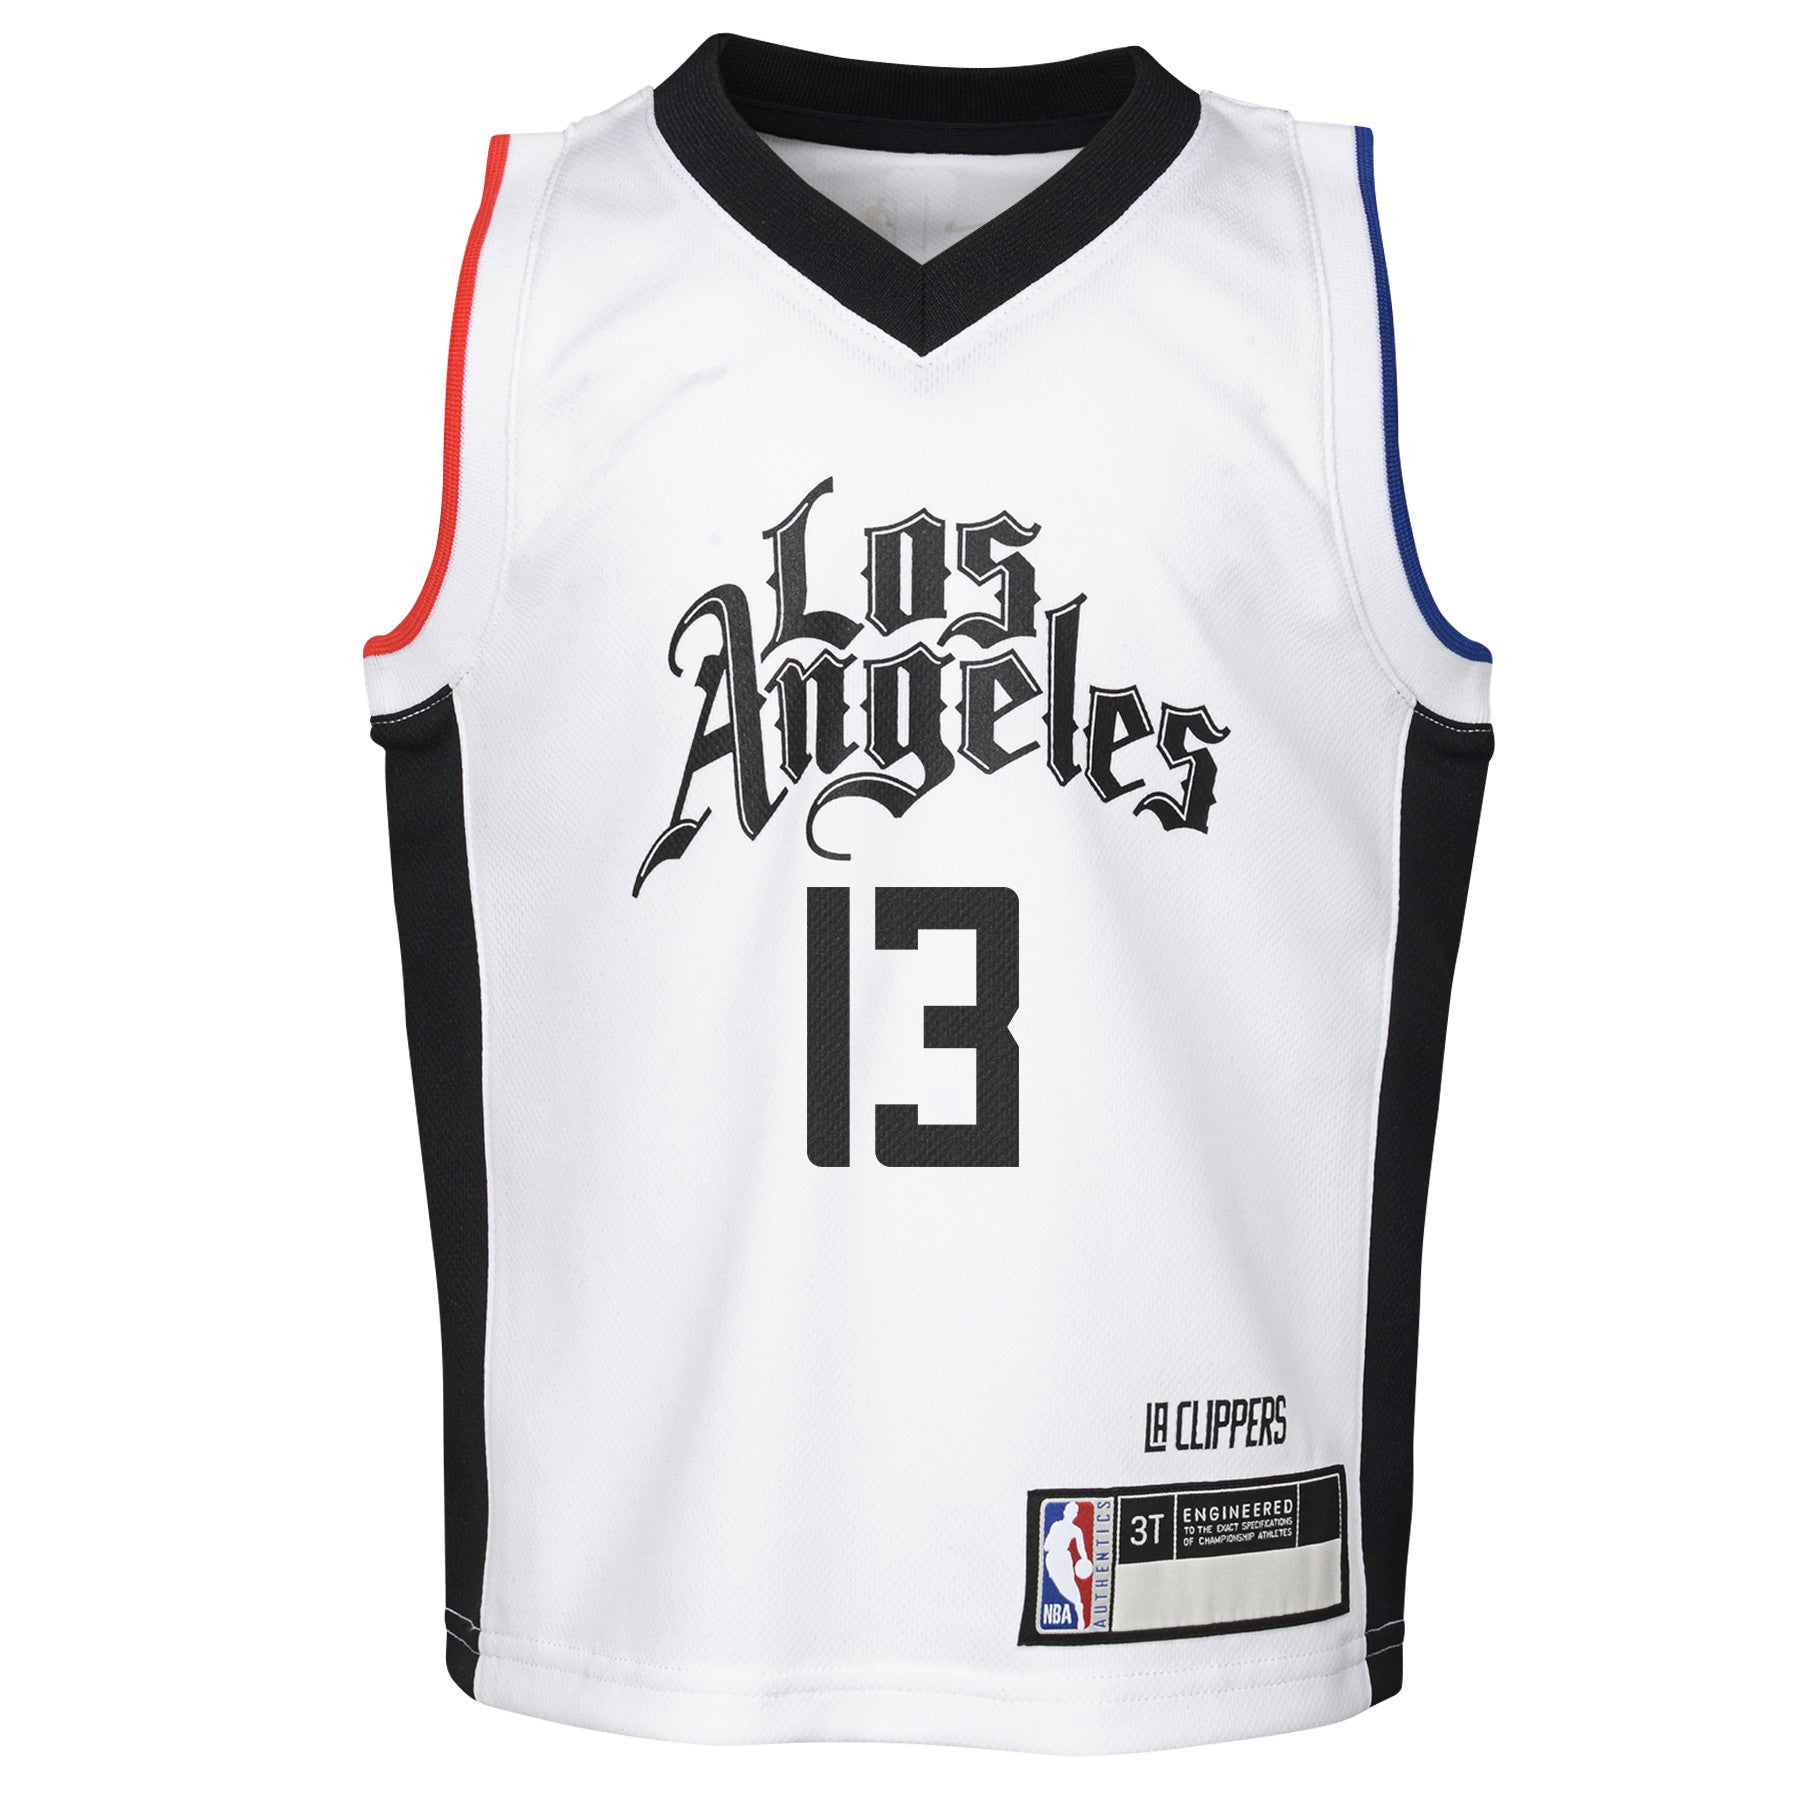 La Clippers Nike Men's NBA T-Shirt in Black, Size: Large | DZ0276-010